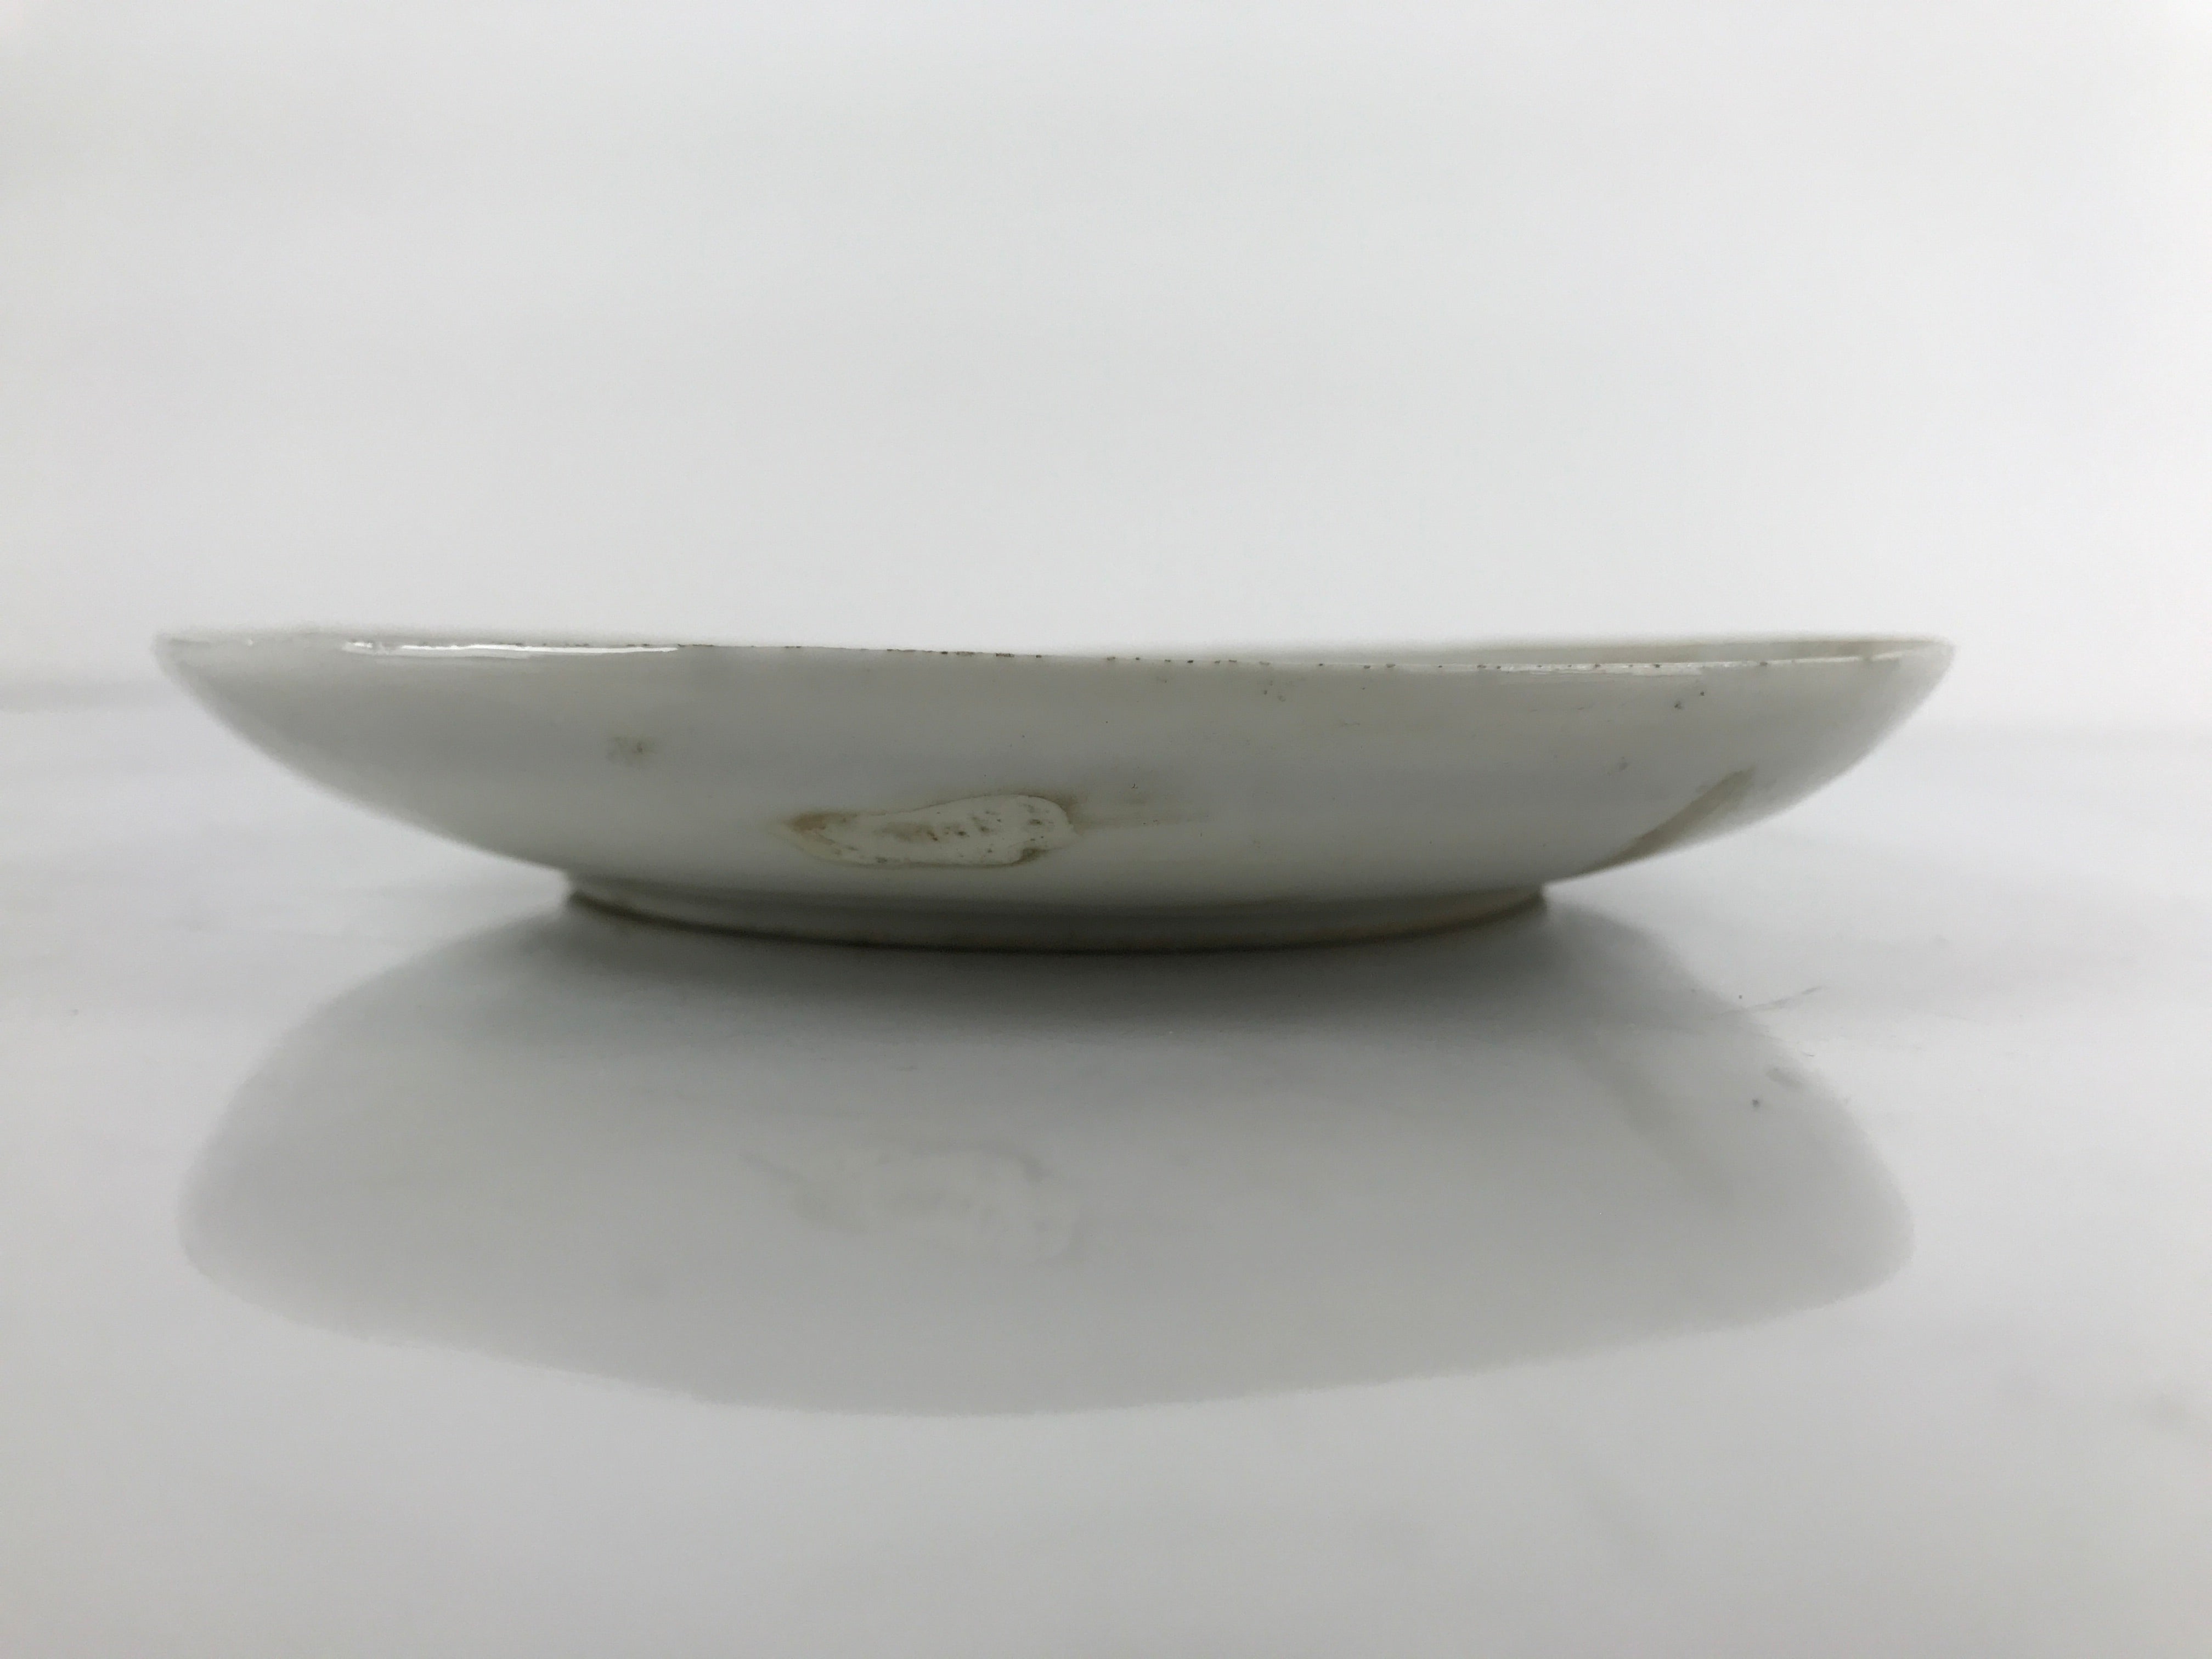 Japanese Porcelain Small Plate Kozara Vtg Plum Blossom Sun Black White PY687